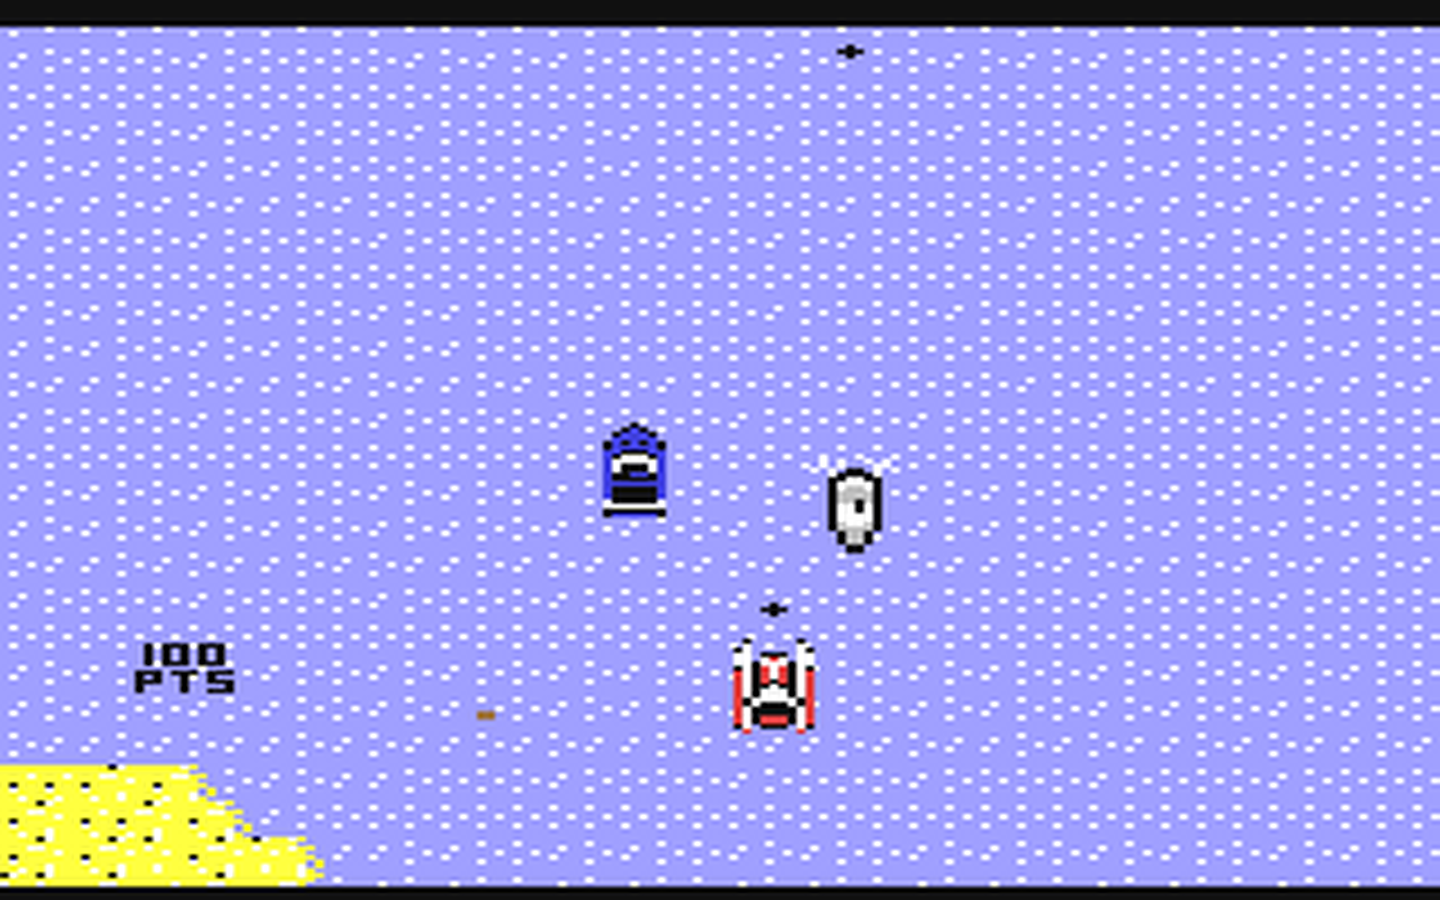 C64 GameBase Powerboat_II (Created_with_SEUCK) 1990